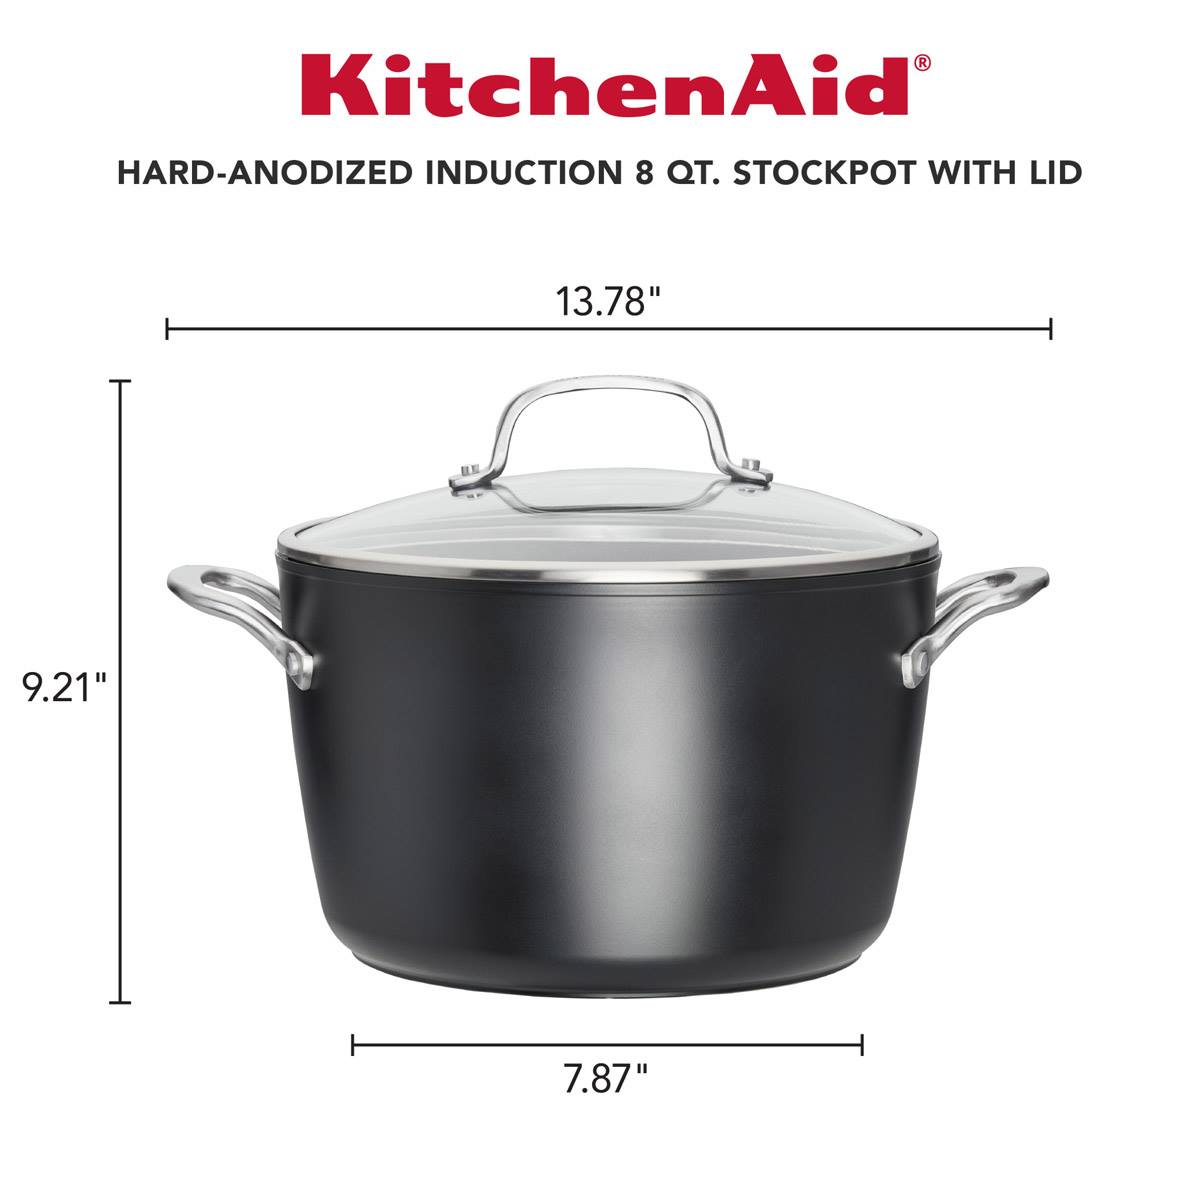 KitchenAid(R) Hard-Anodized Induction 8qt. Nonstick Stockpot